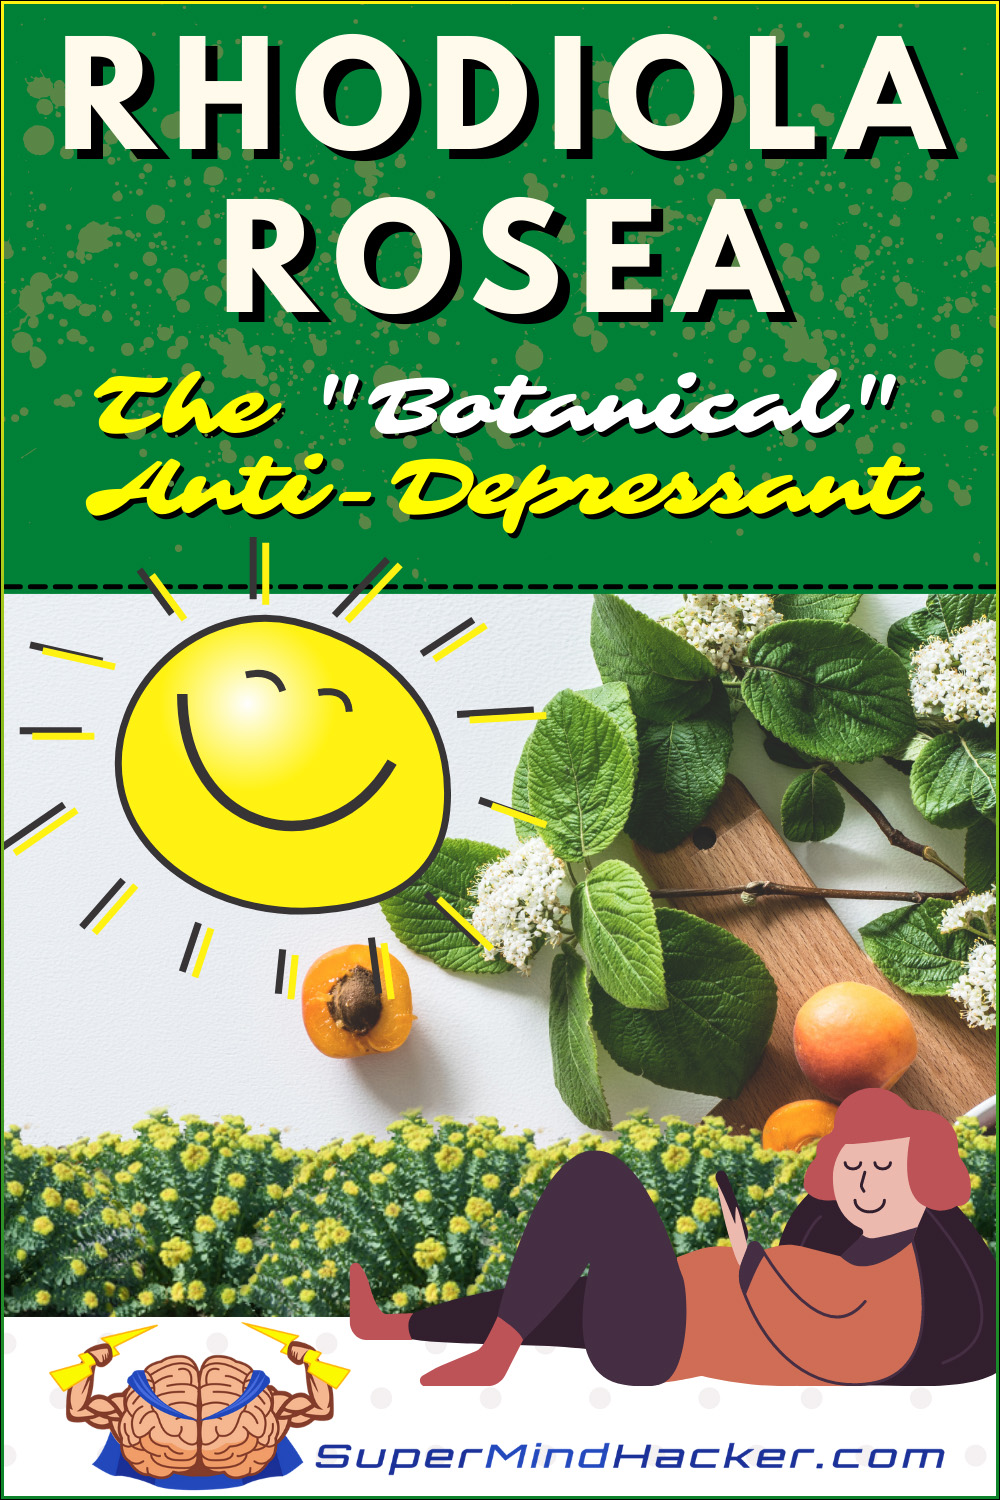 Rhodiola Rosea – The Botanical “Natural” Antidepressant Nootropic!